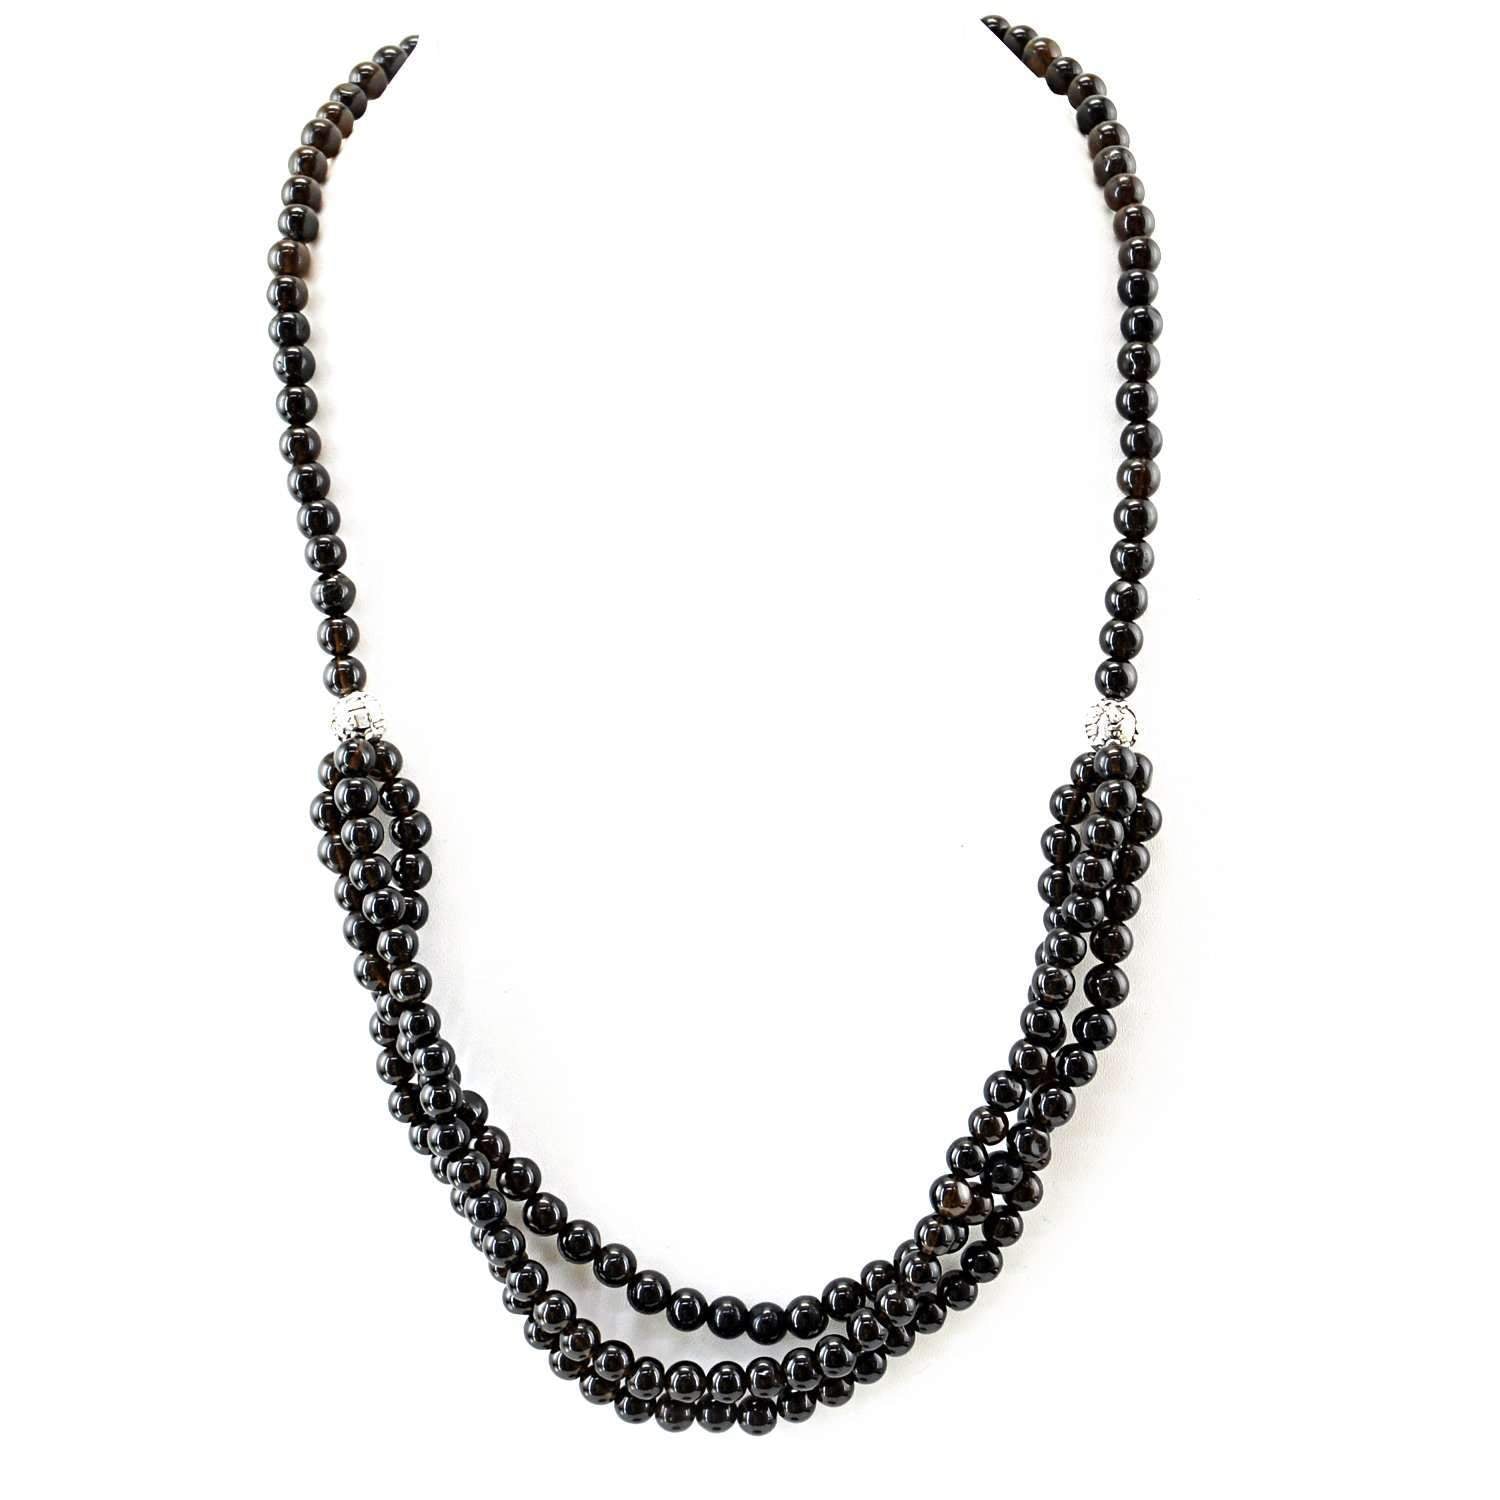 gemsmore:20 Inches Long Smoky Quartz Necklace Round Beads - Single Strand